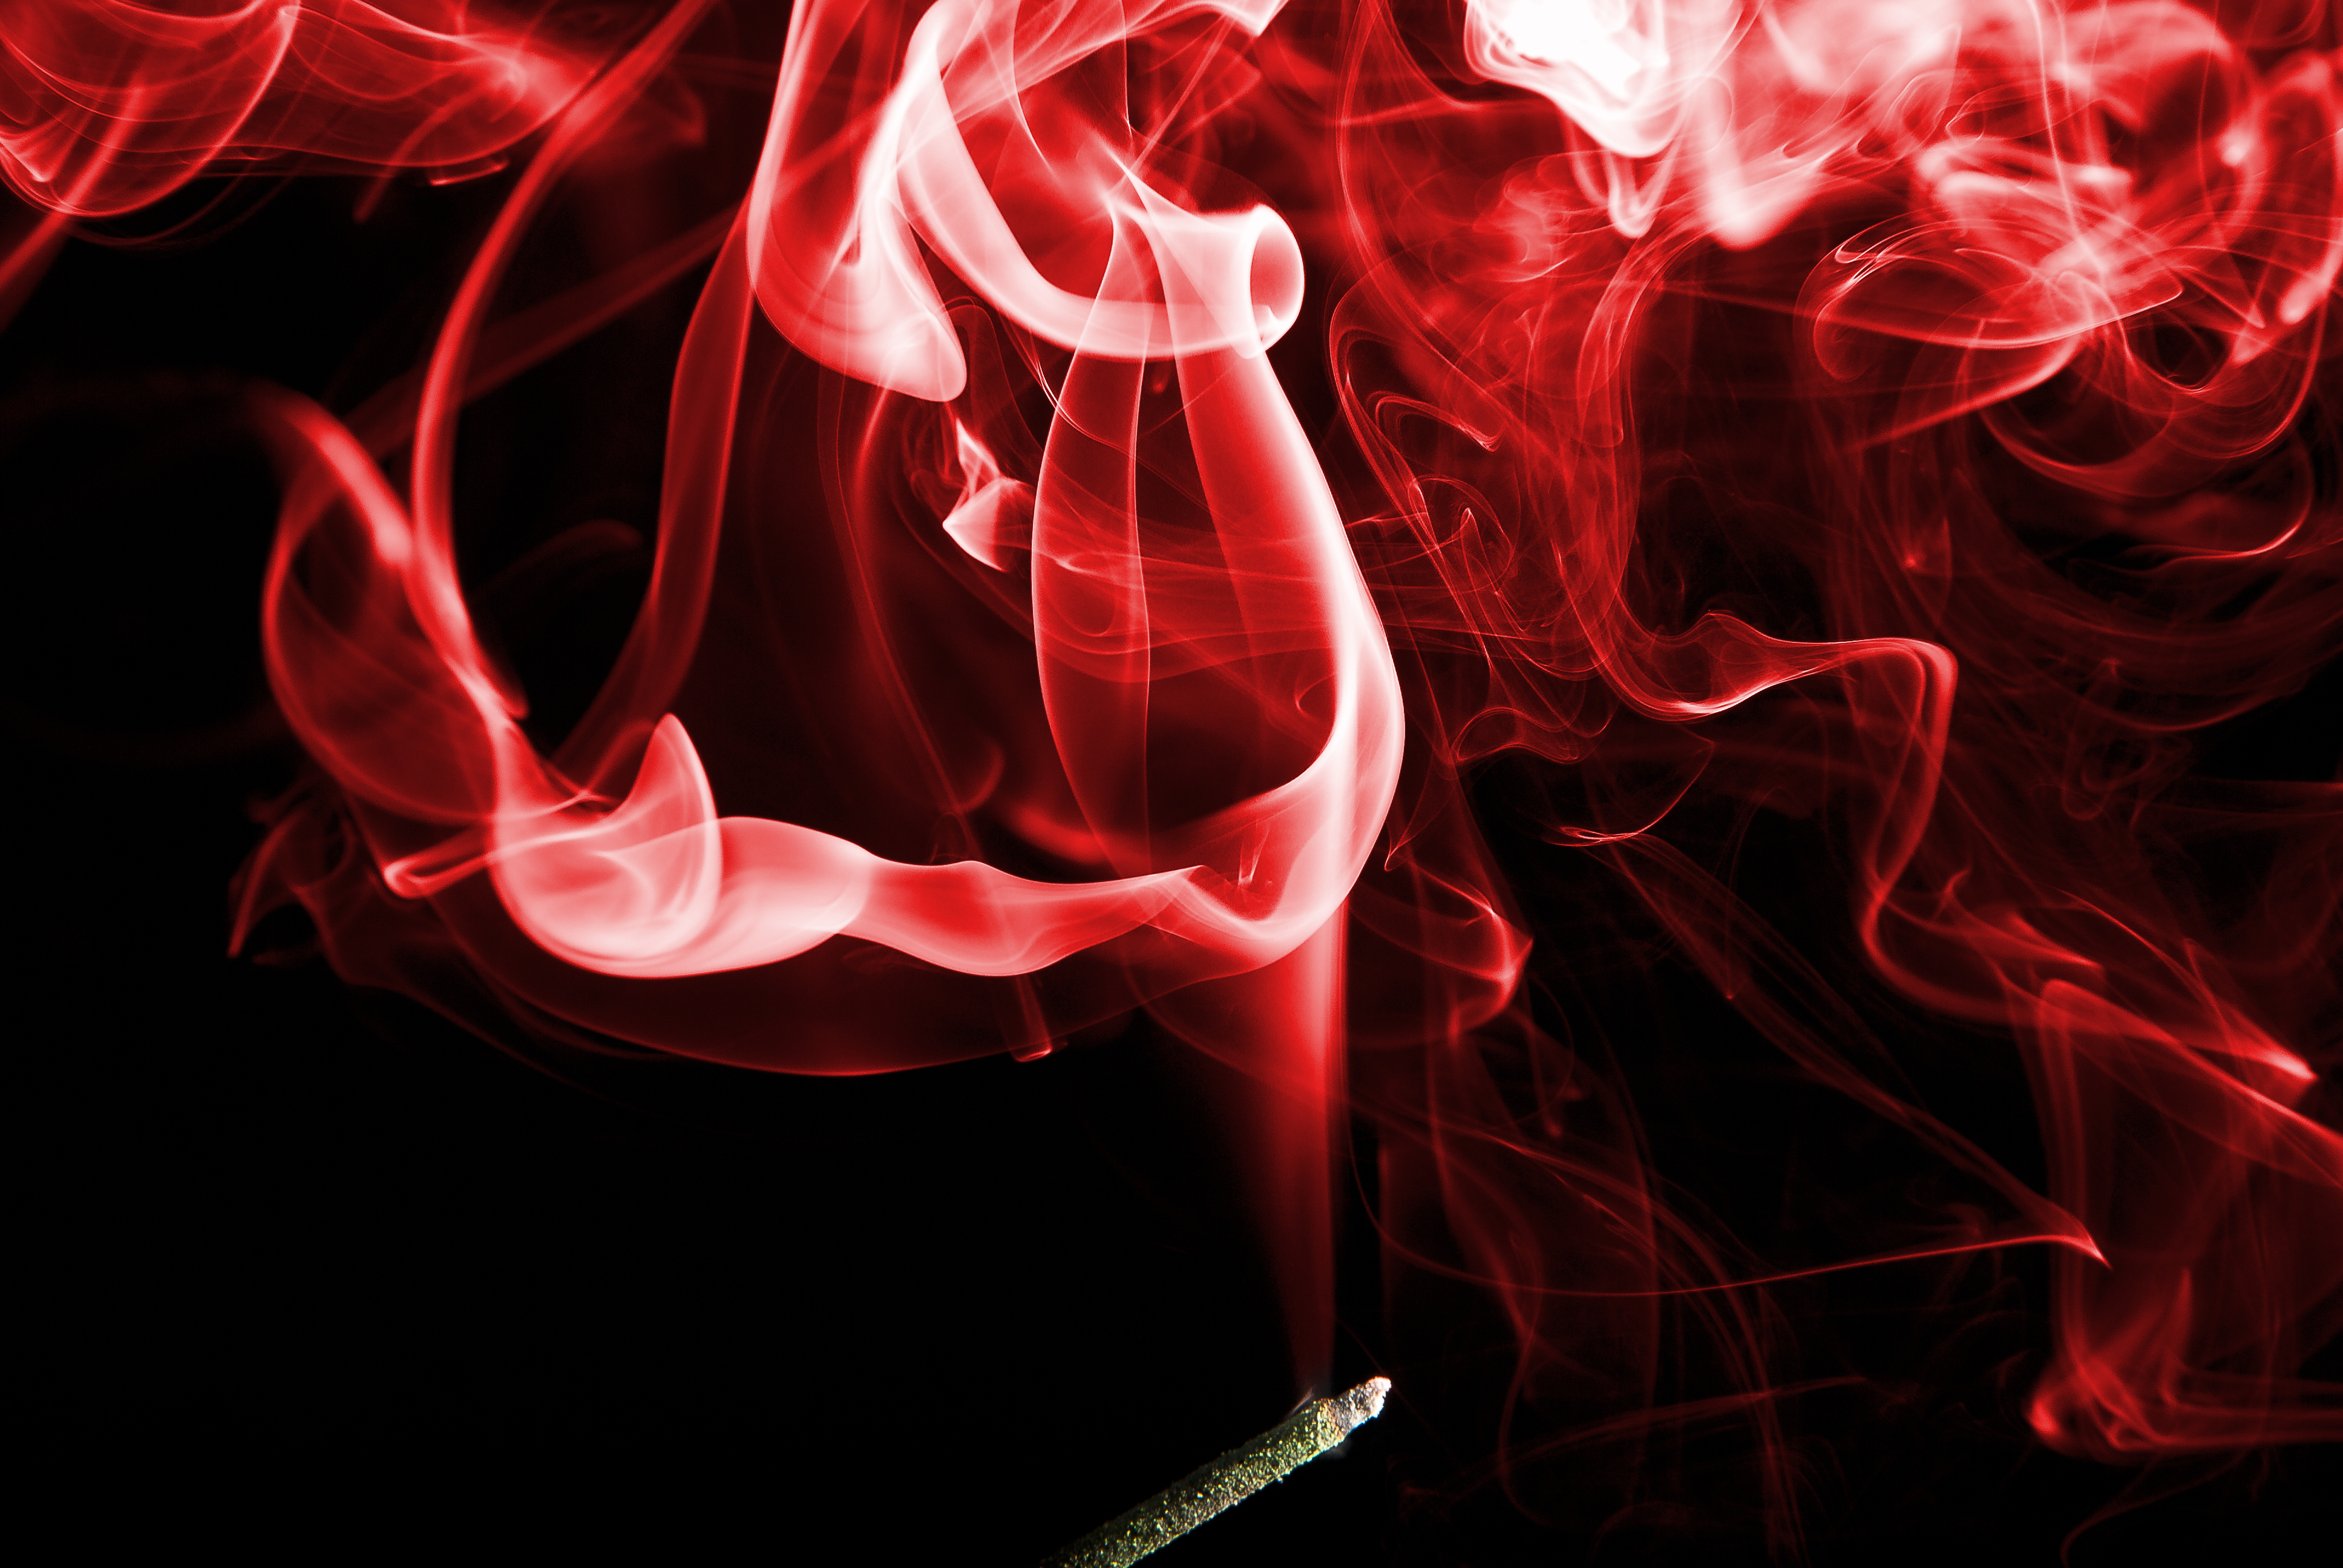 Red Smoke Wallpapers - WallpaperSafari